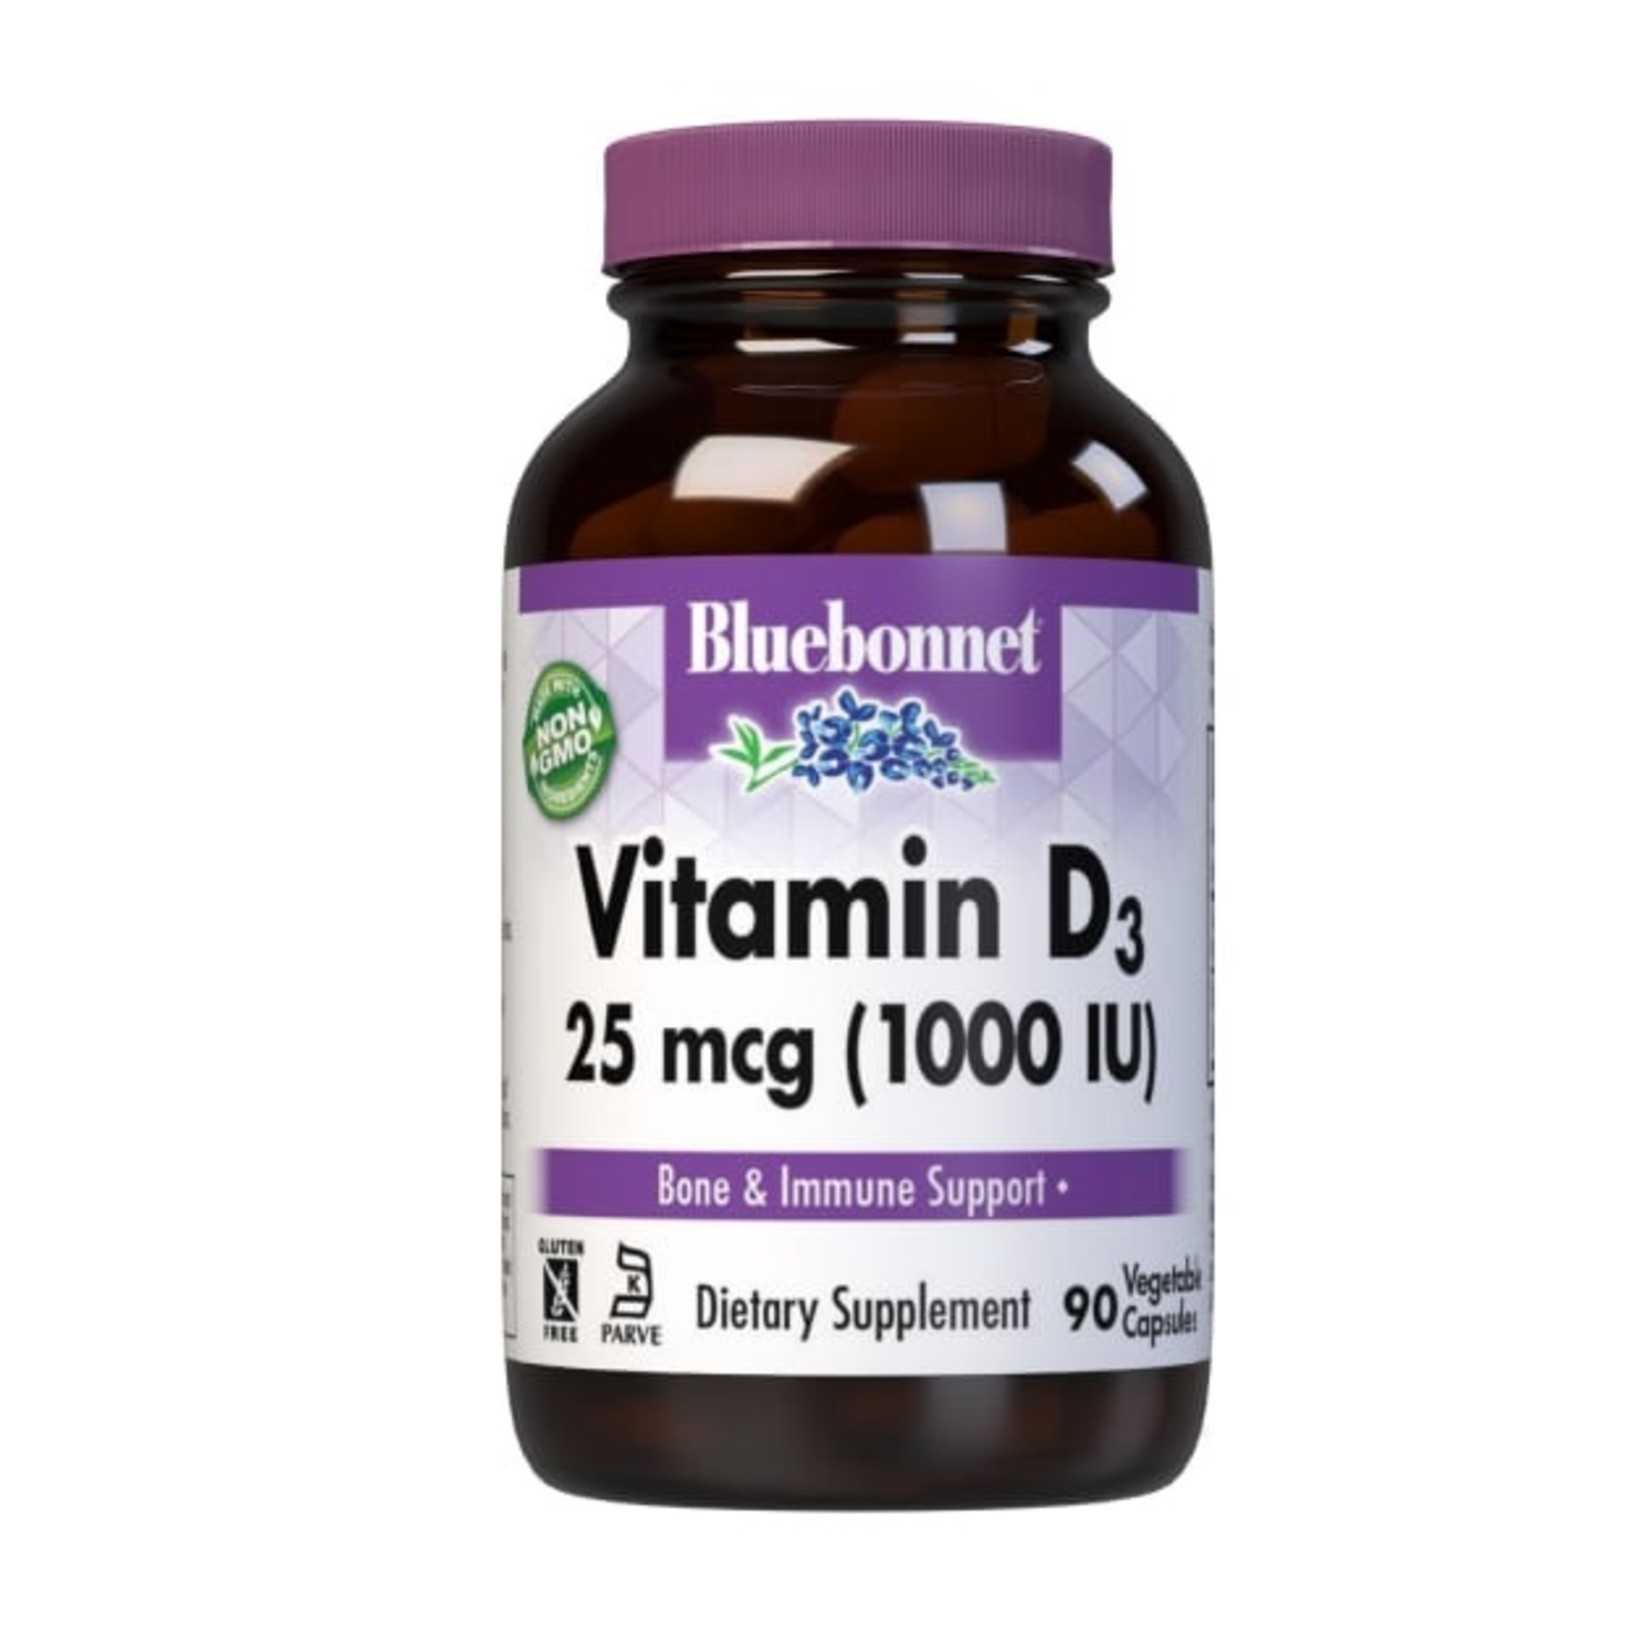 Bluebonnet Bluebonnet - Vitamin D3 1000 IU - 90 Veg Capsules